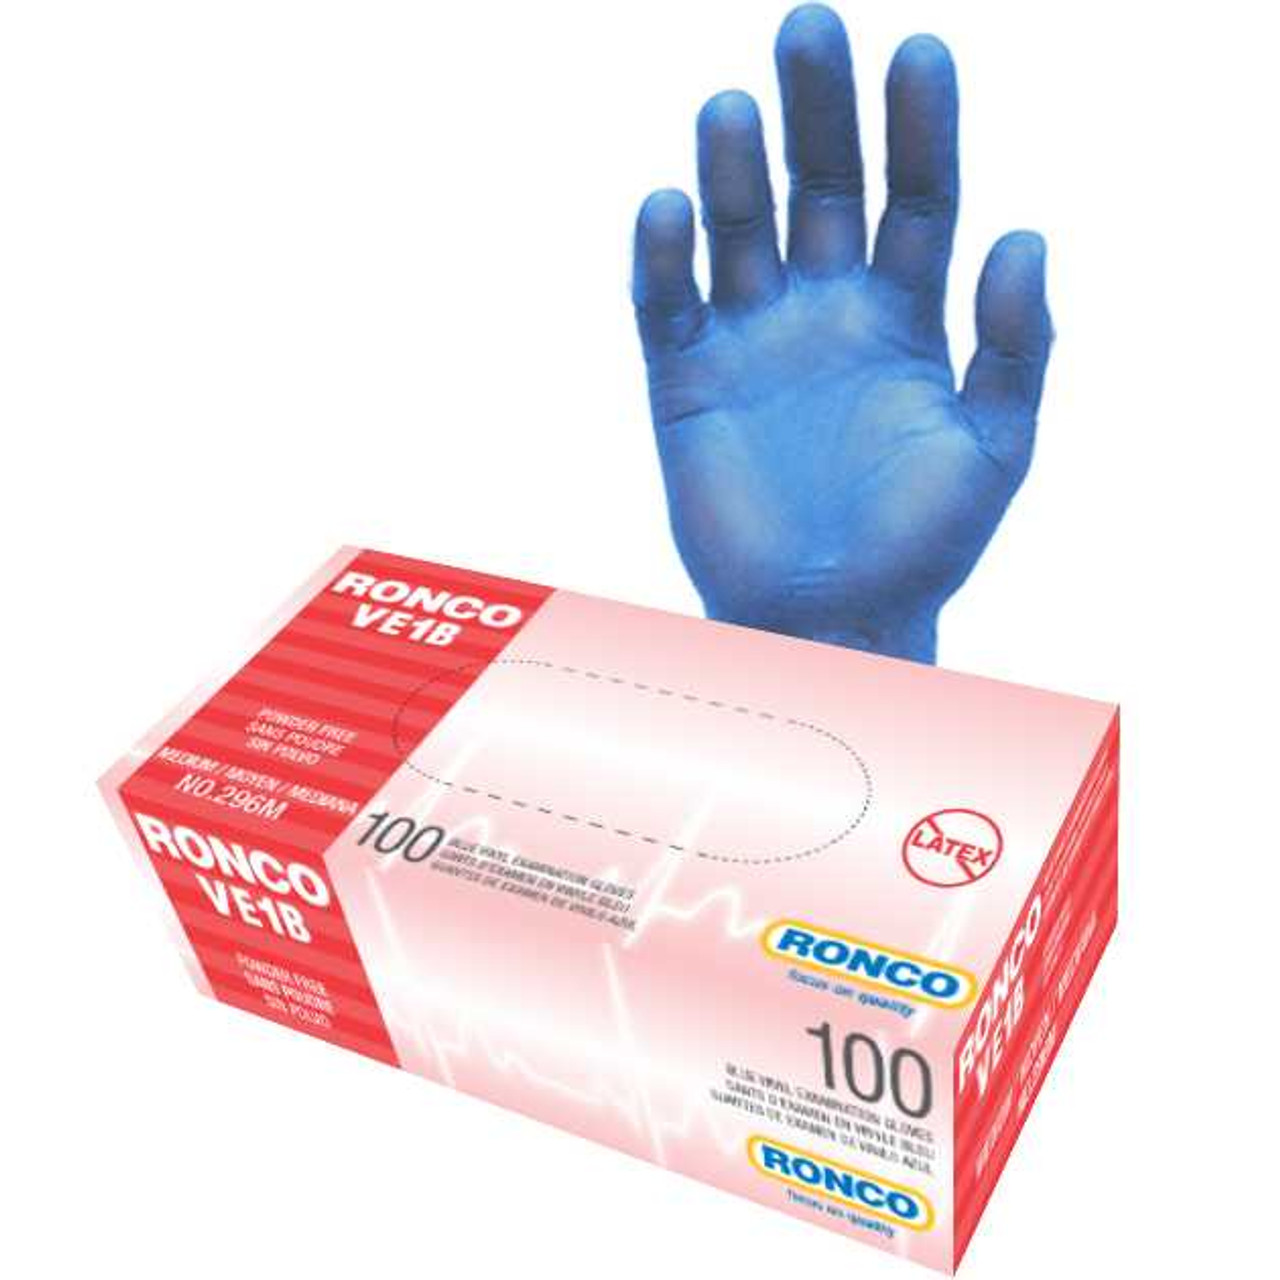 Ronco VE1B, Blue Vinyl Examination Glove - 3 mil (1,000 gloves / case)